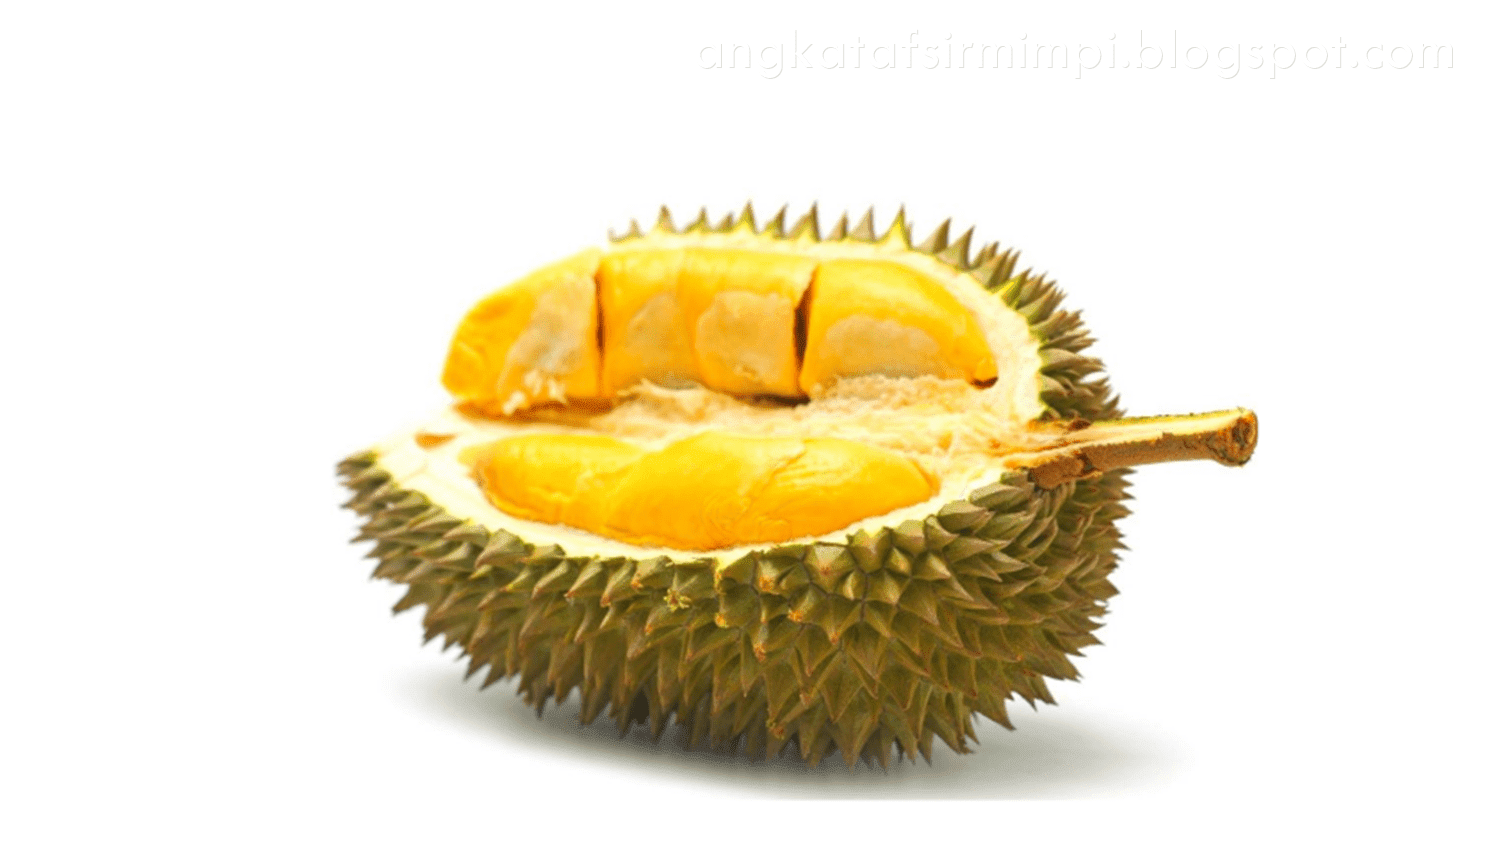 Mimpi beli durian togel